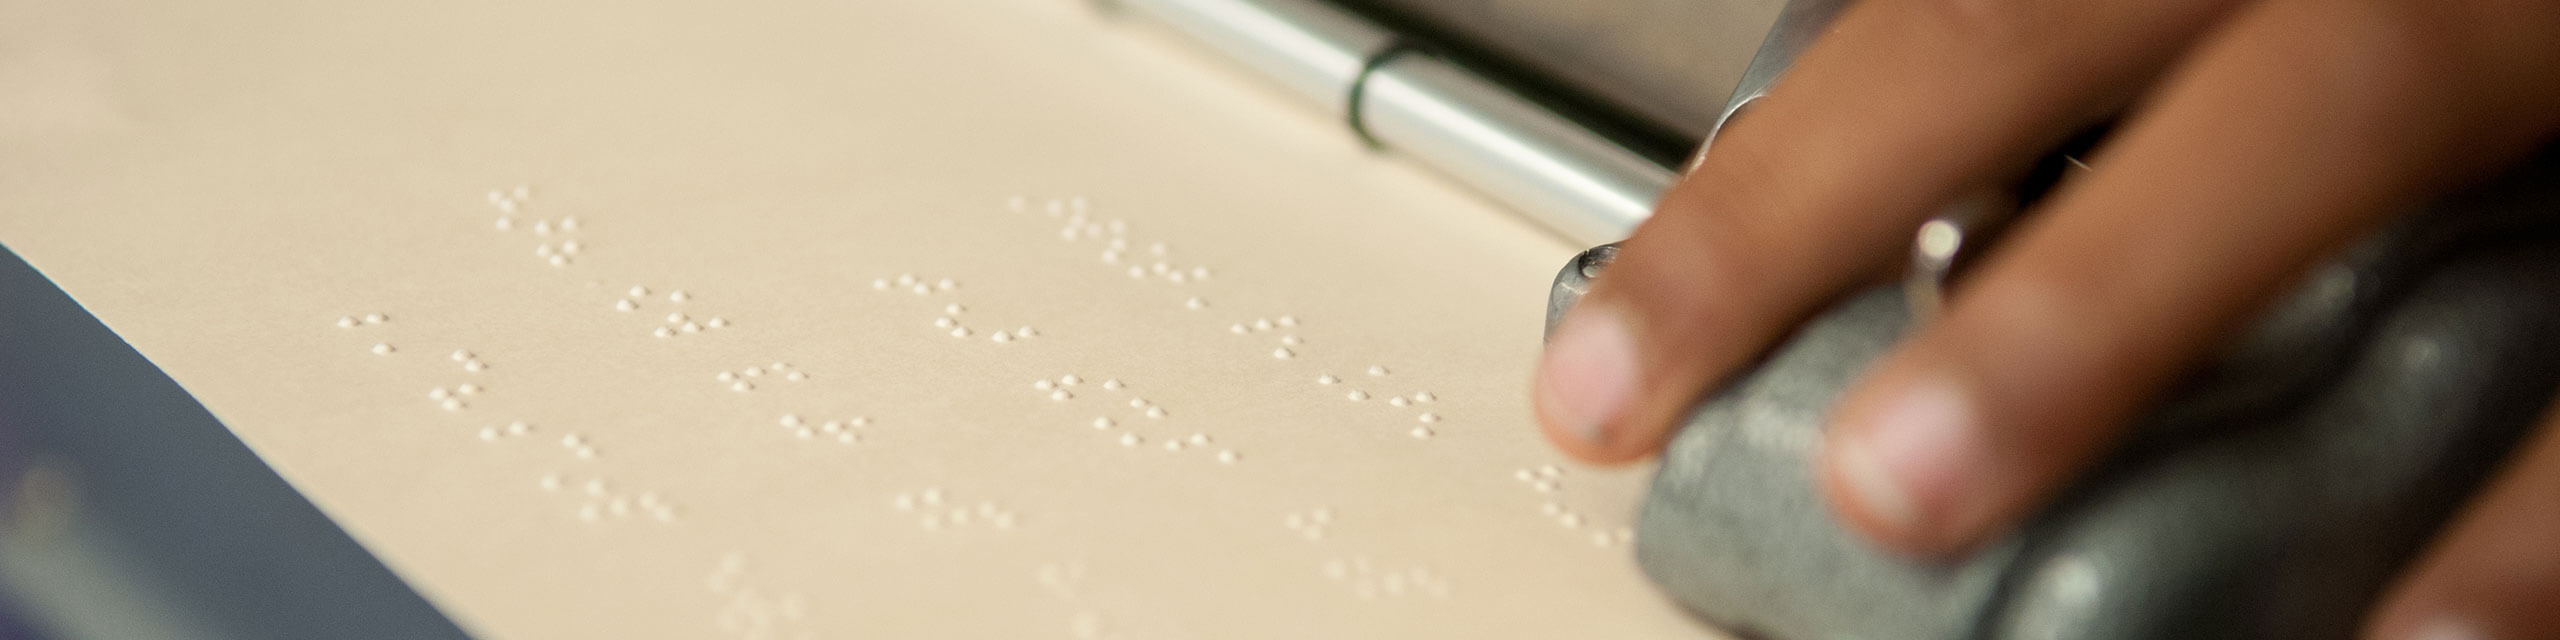 Student working on a braille machine.